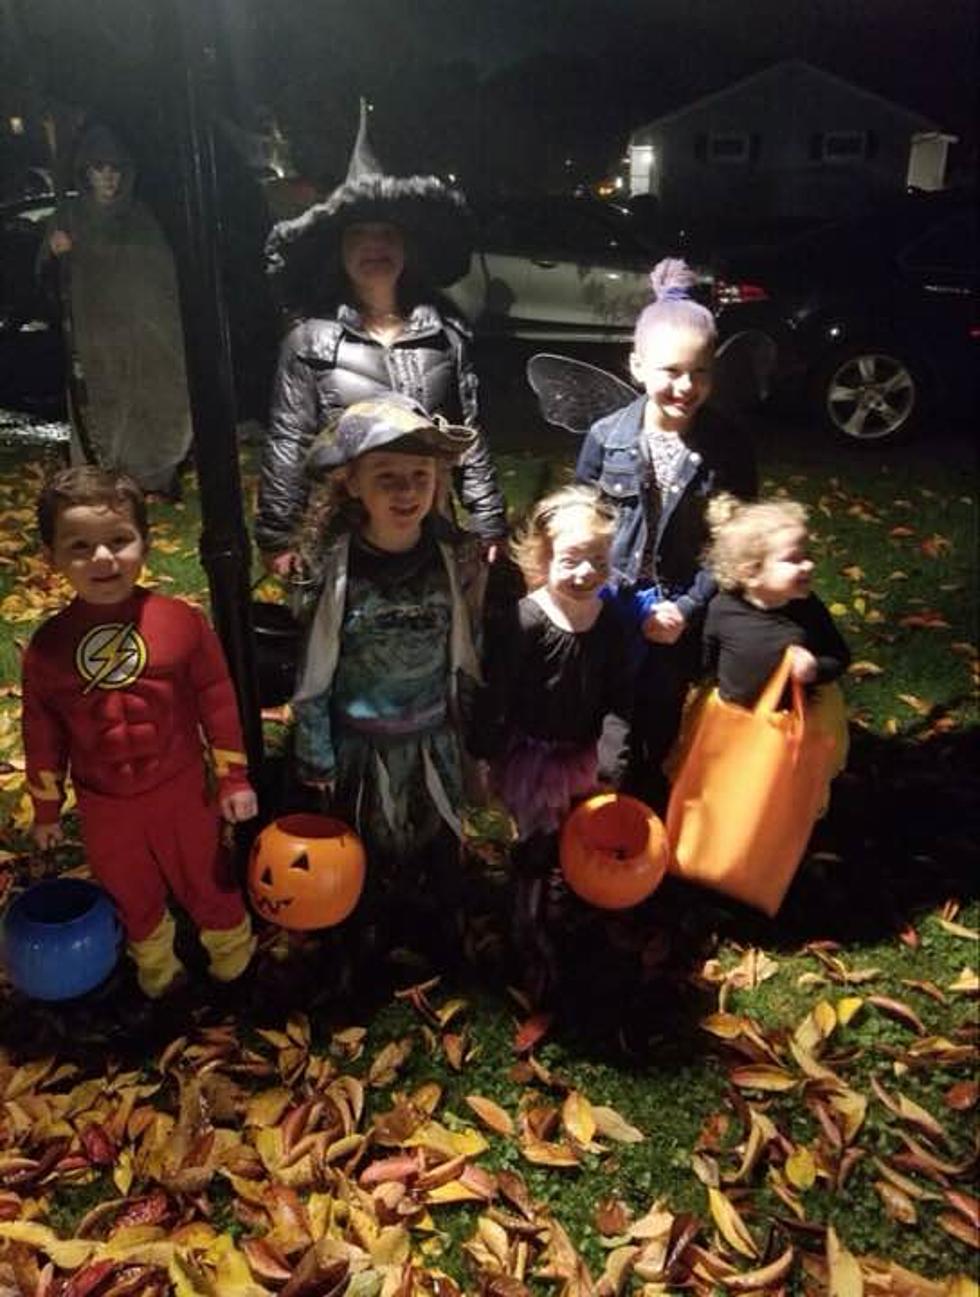 Danbury Area Folks Share Their Hilarious Halloween Costume Ideas